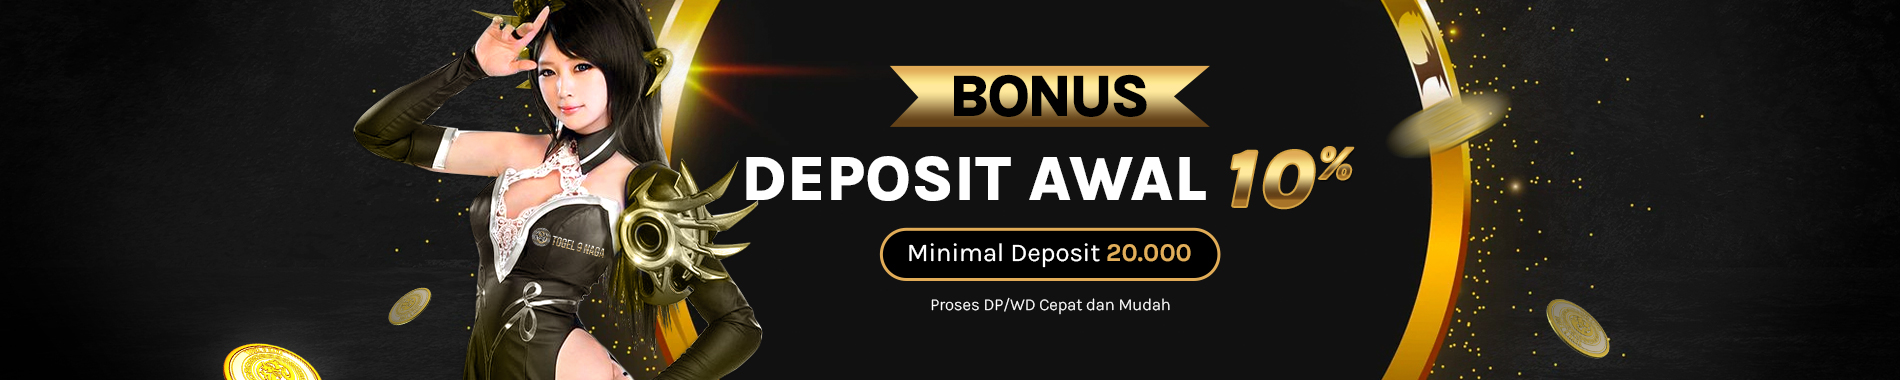 Bonus Deposit Awal Togel9naga